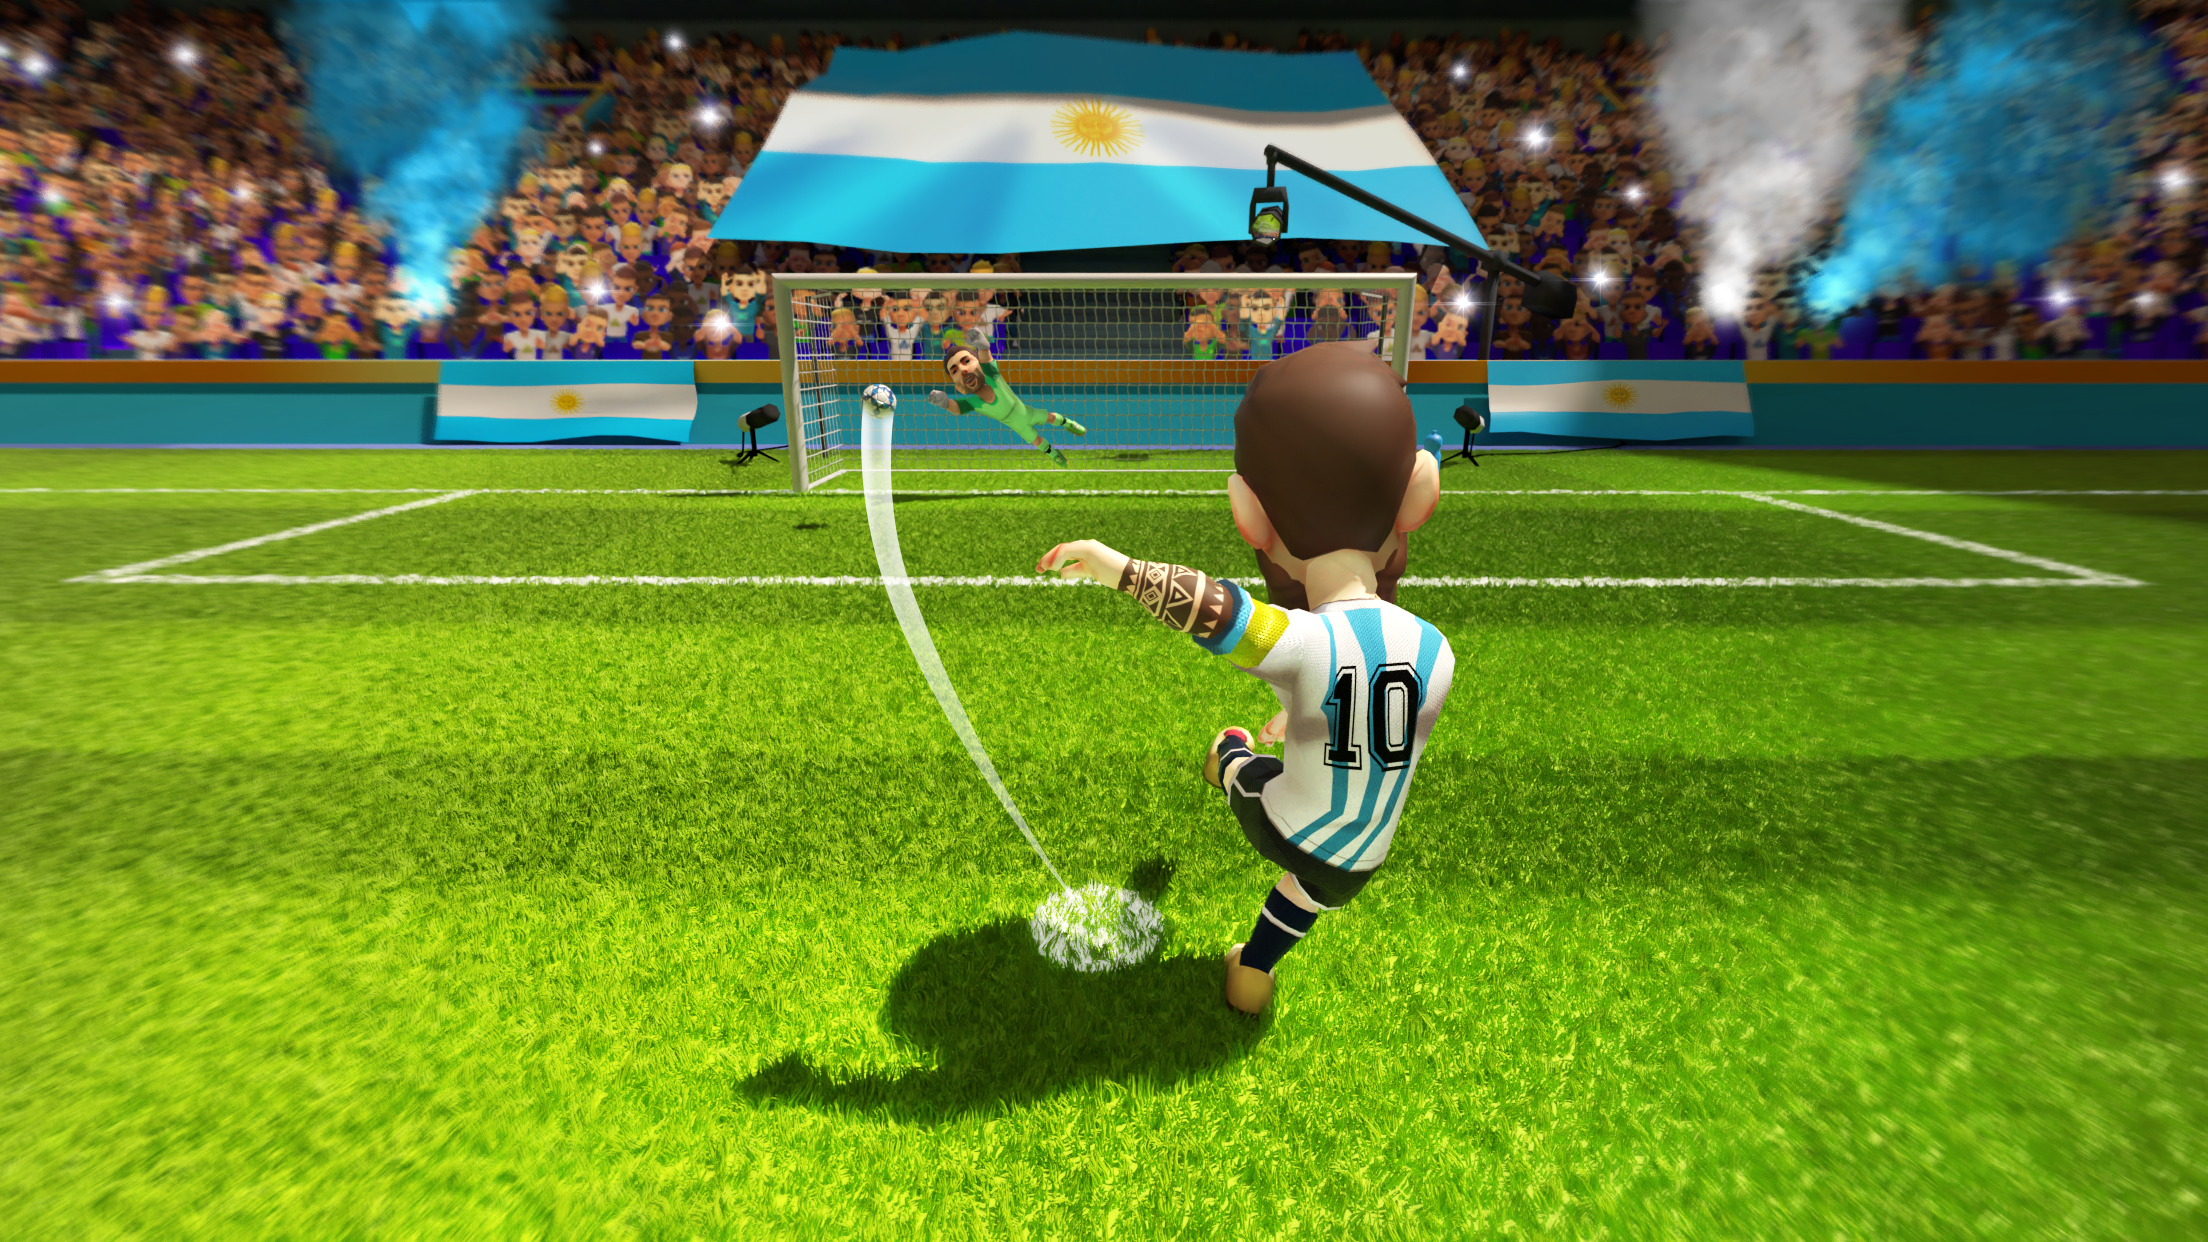 Screenshot 1 of มินิฟุตบอล - ฟุตบอลมือถือ 3.1.0